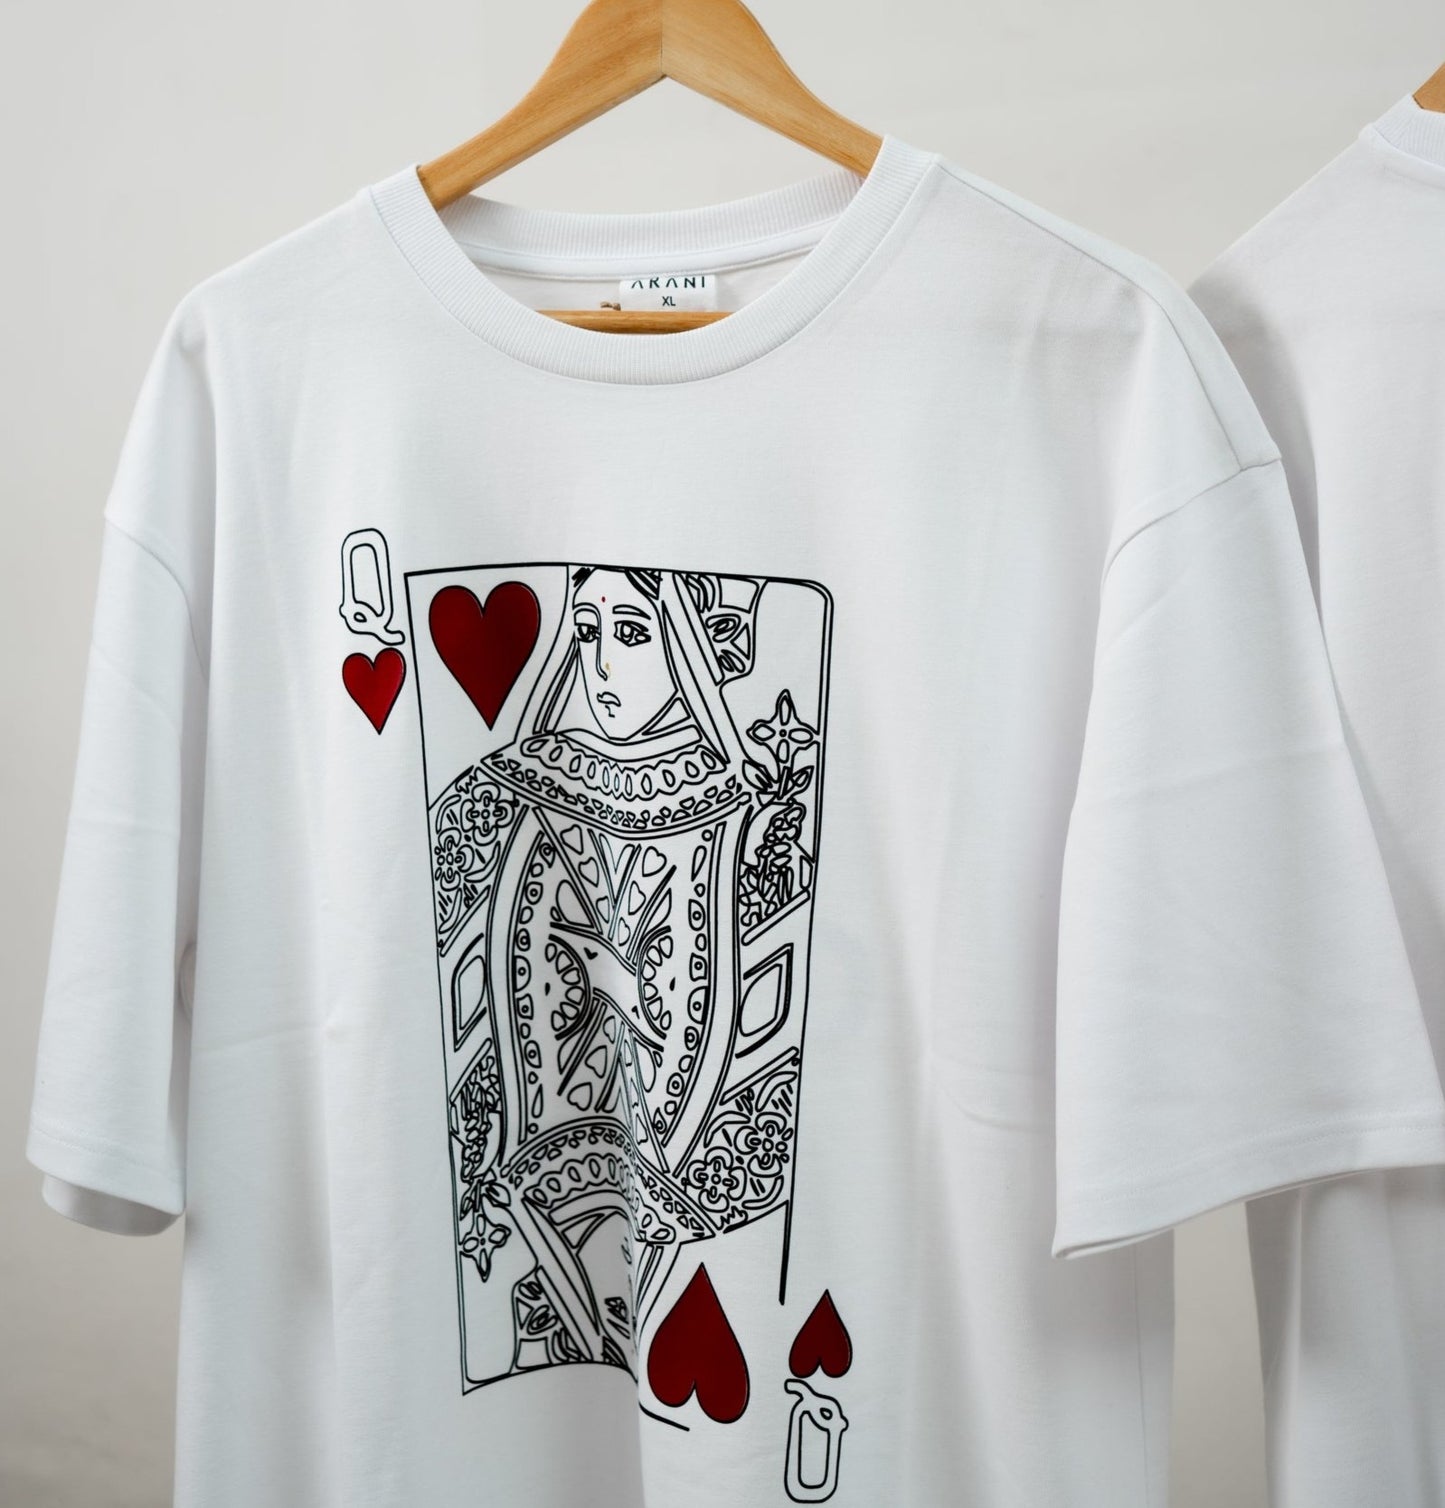 The Rani of Hearts T-Shirt